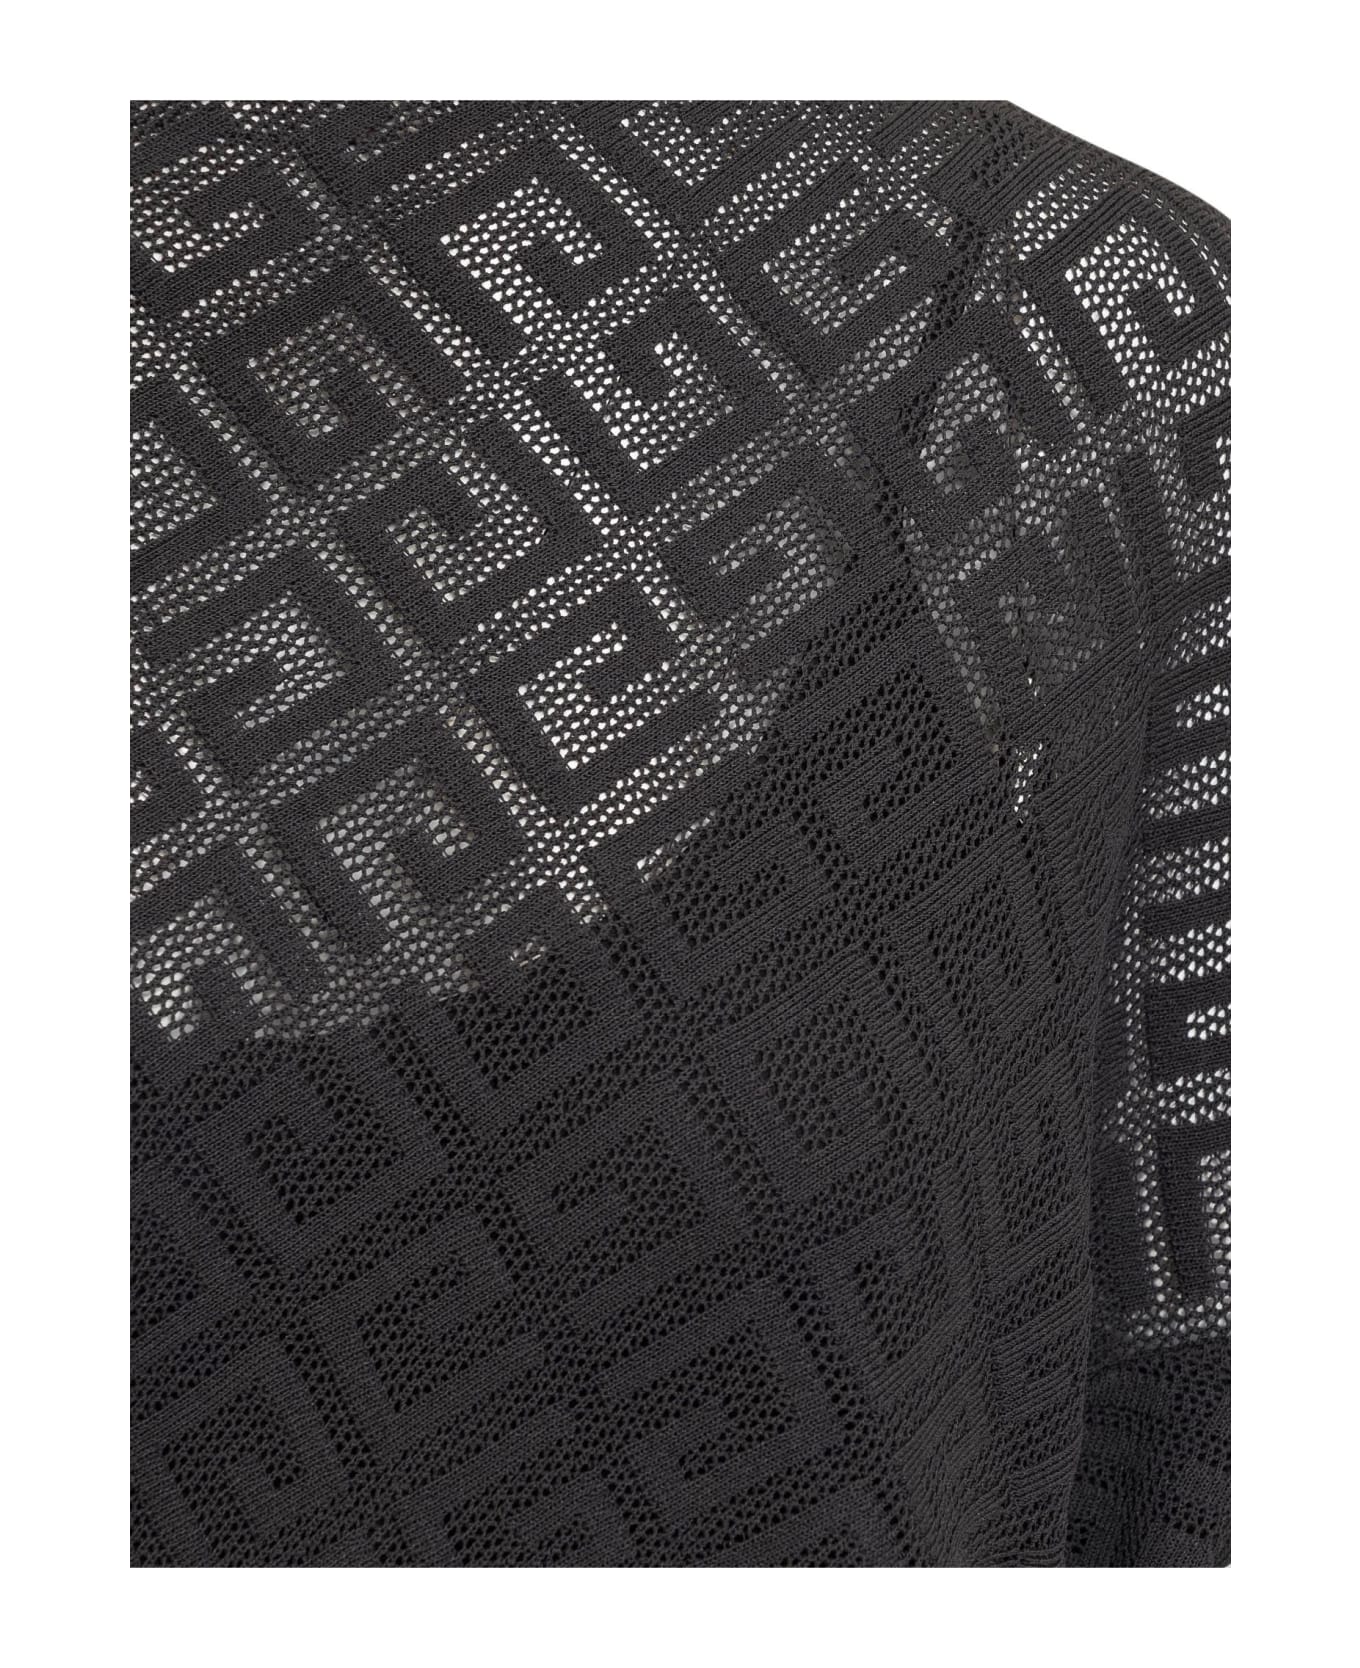 Givenchy Jacquard Knit Dress - black ワンピース＆ドレス